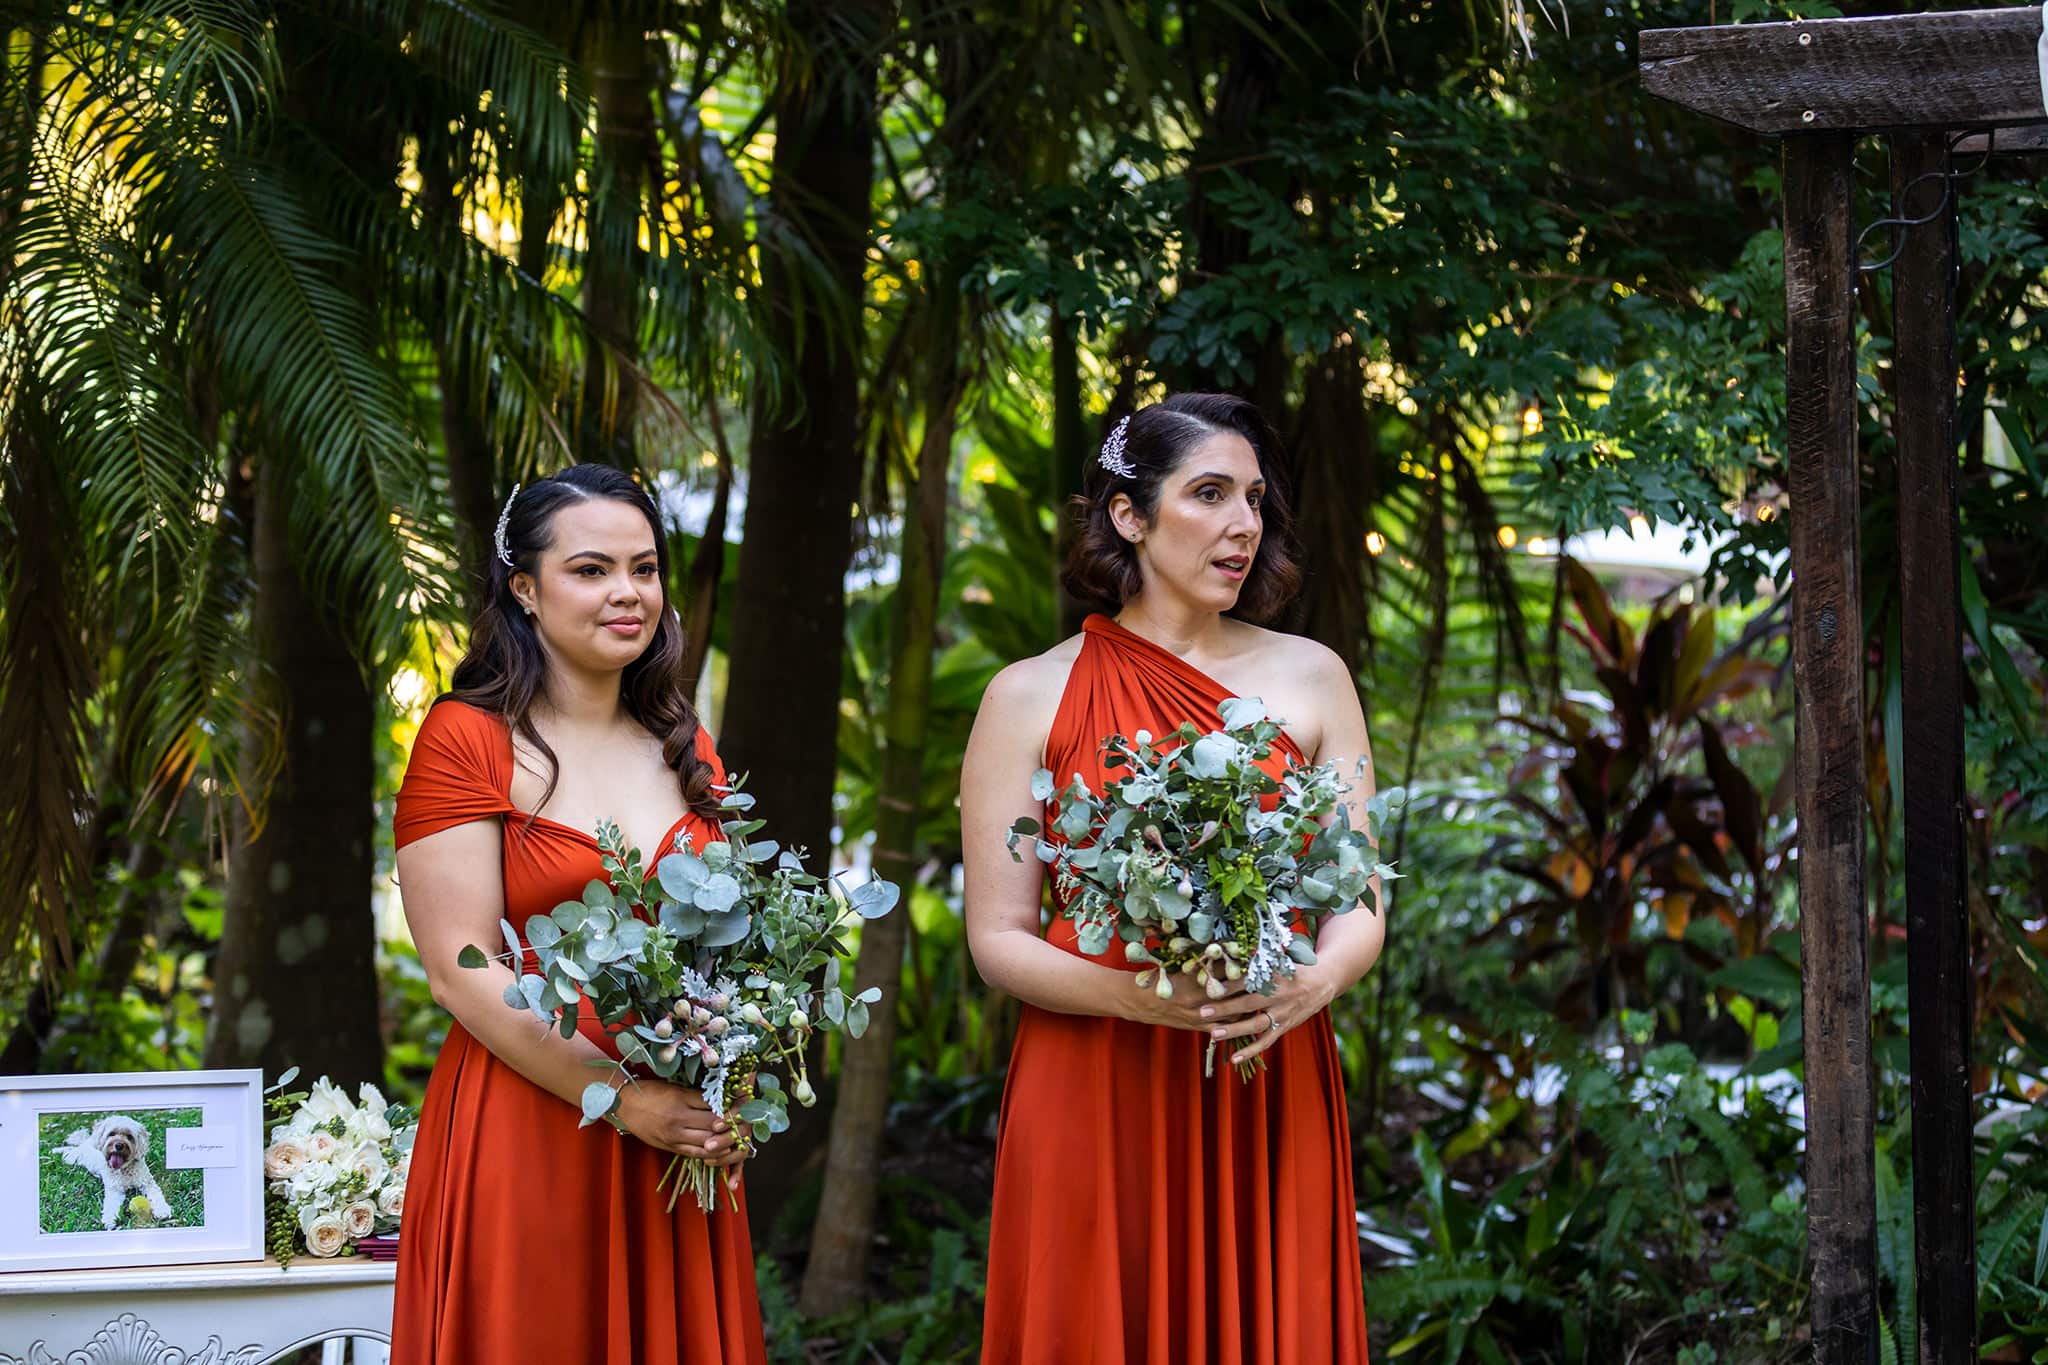 Sol Gardens Currumbin Valley wedding ceremony by Mooi Photography.